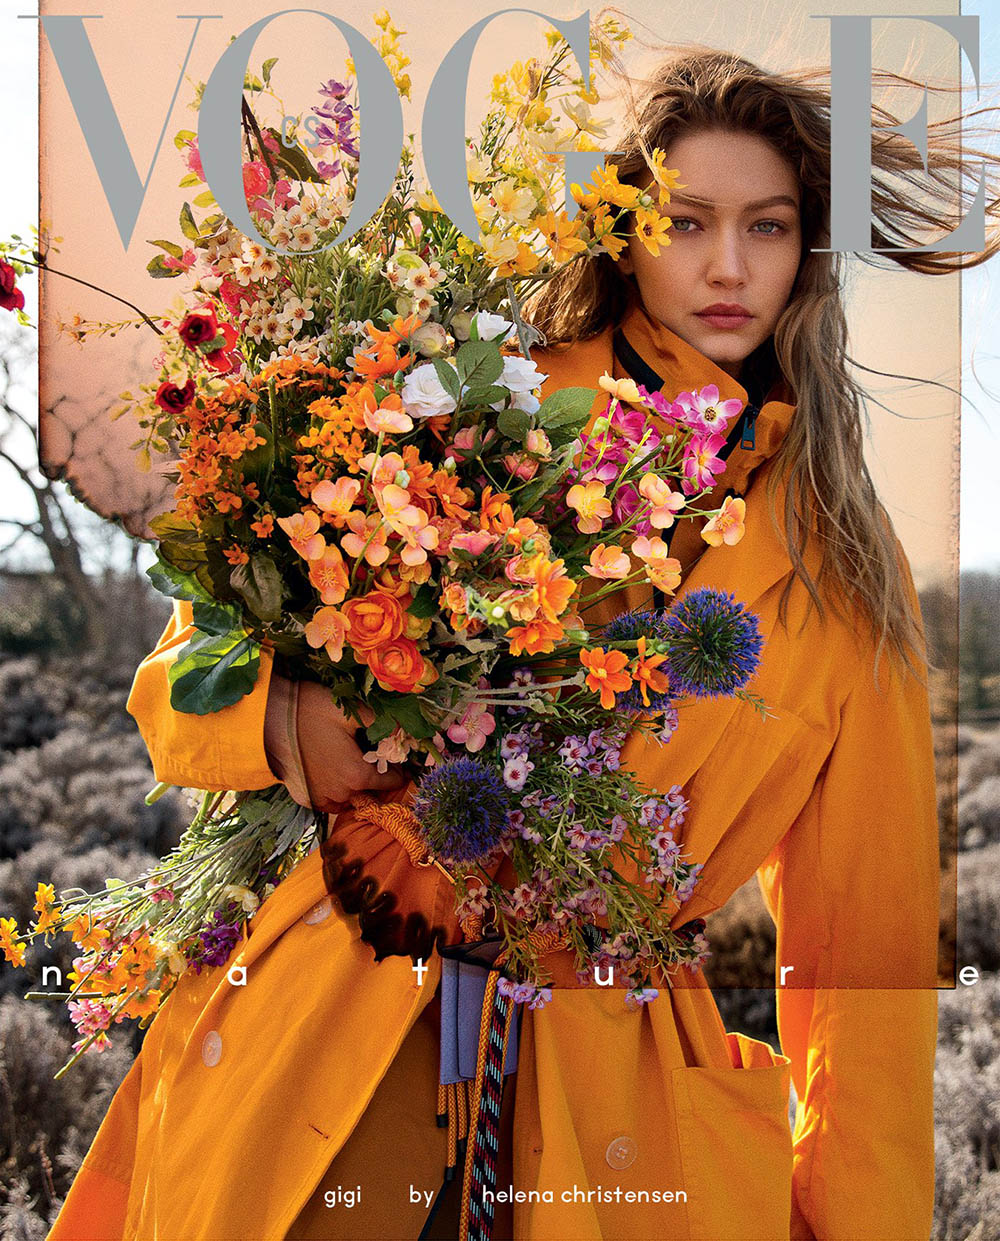 Gigi Hadid covers Vogue Czechoslovakia May 2019 by Helena Christensen